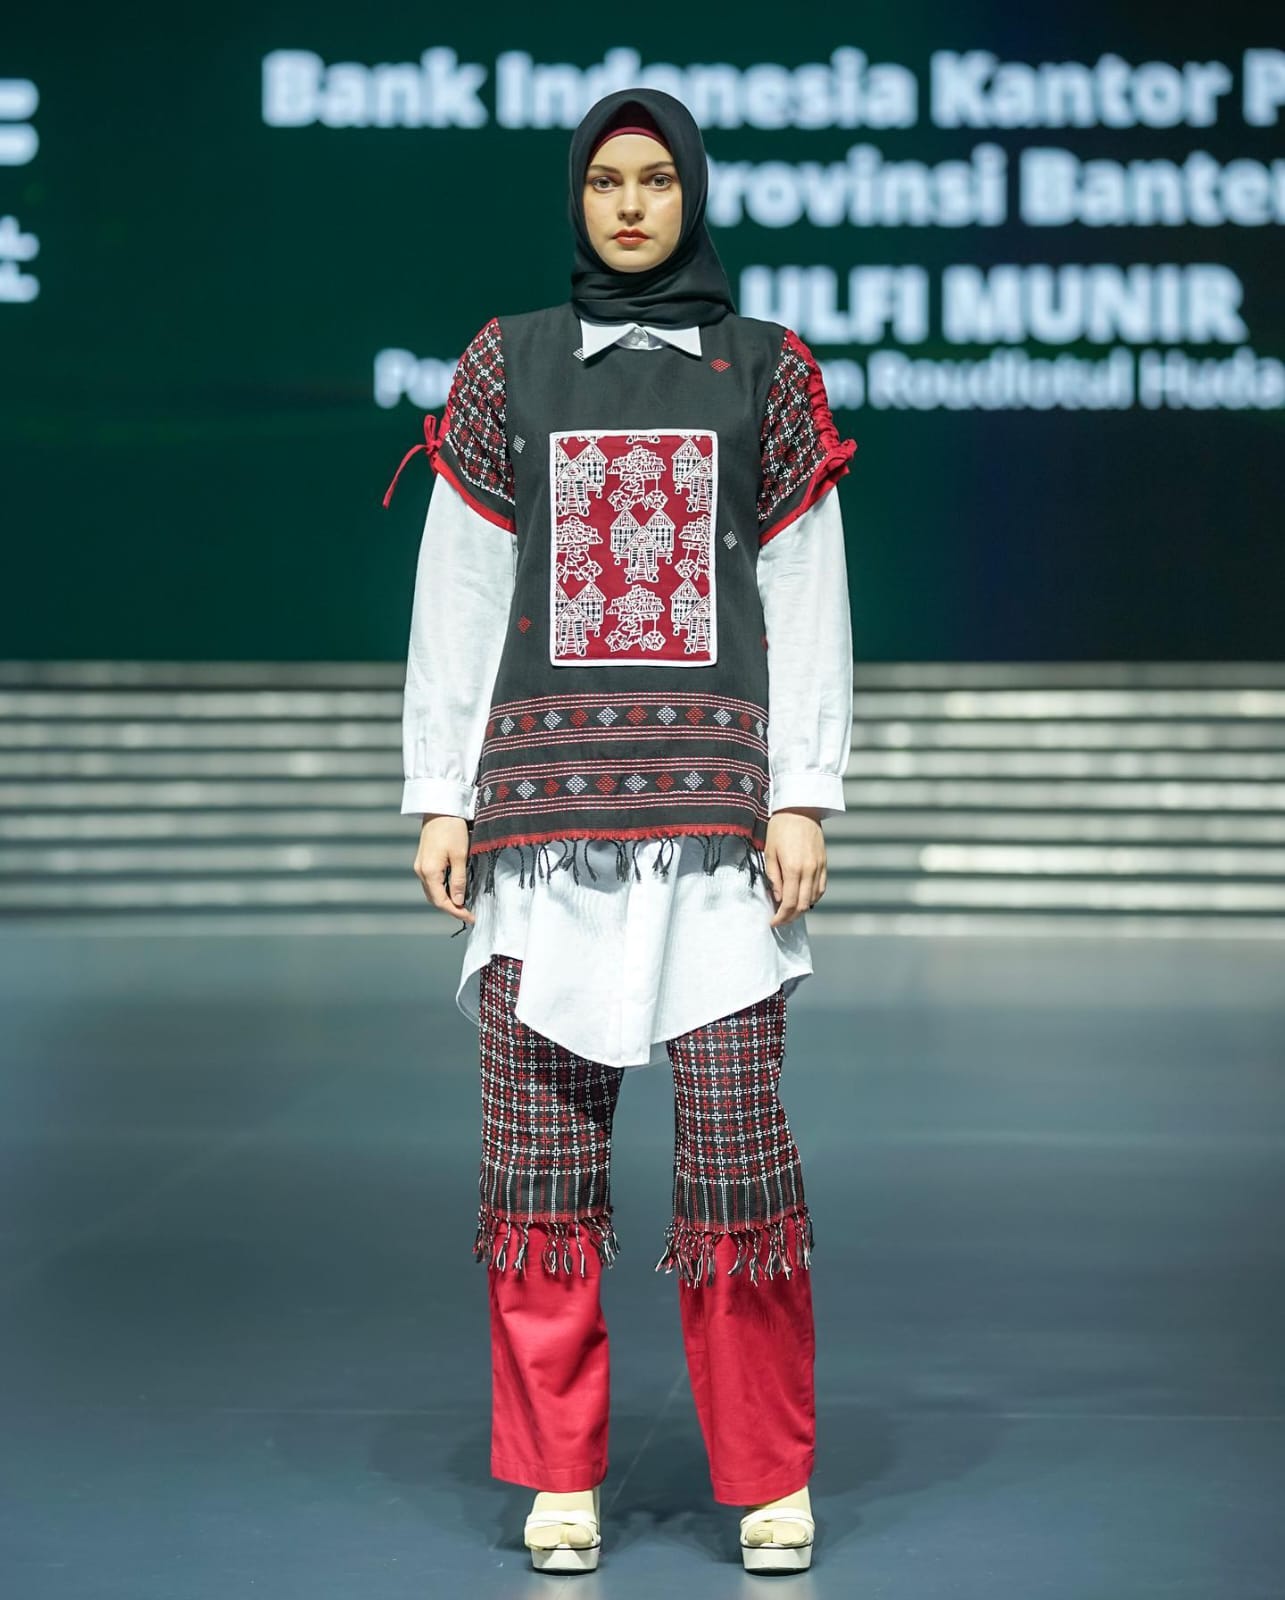 Wow, Modest Fashion Banten Jadi Primadona Dalam Event ISEF ke-10